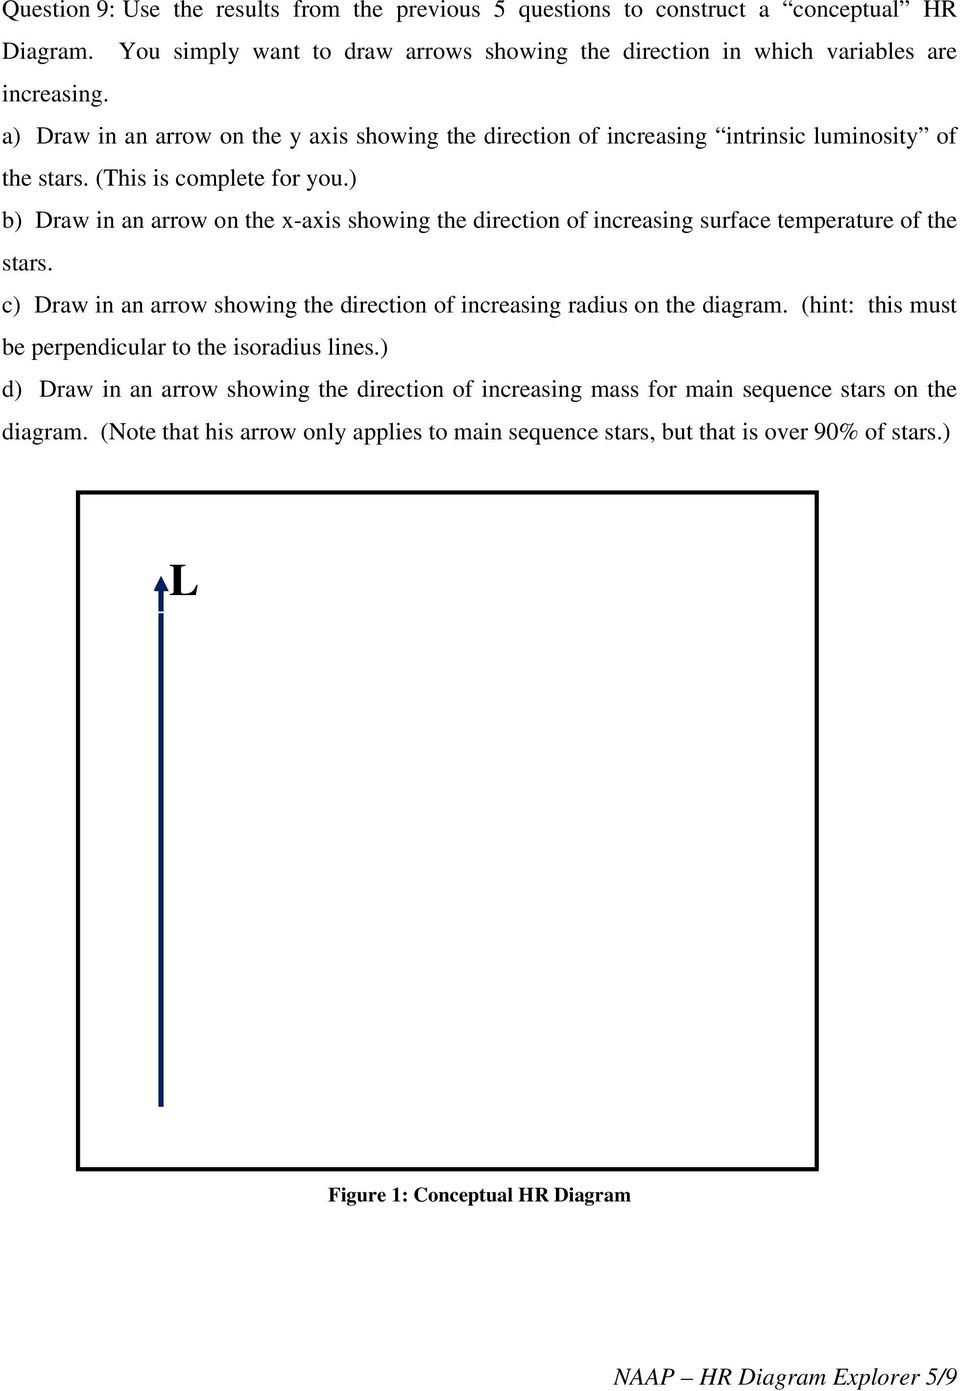 Hr Diagram Definition Hr Diagram Isoradius Lines Wiring Diagram Library